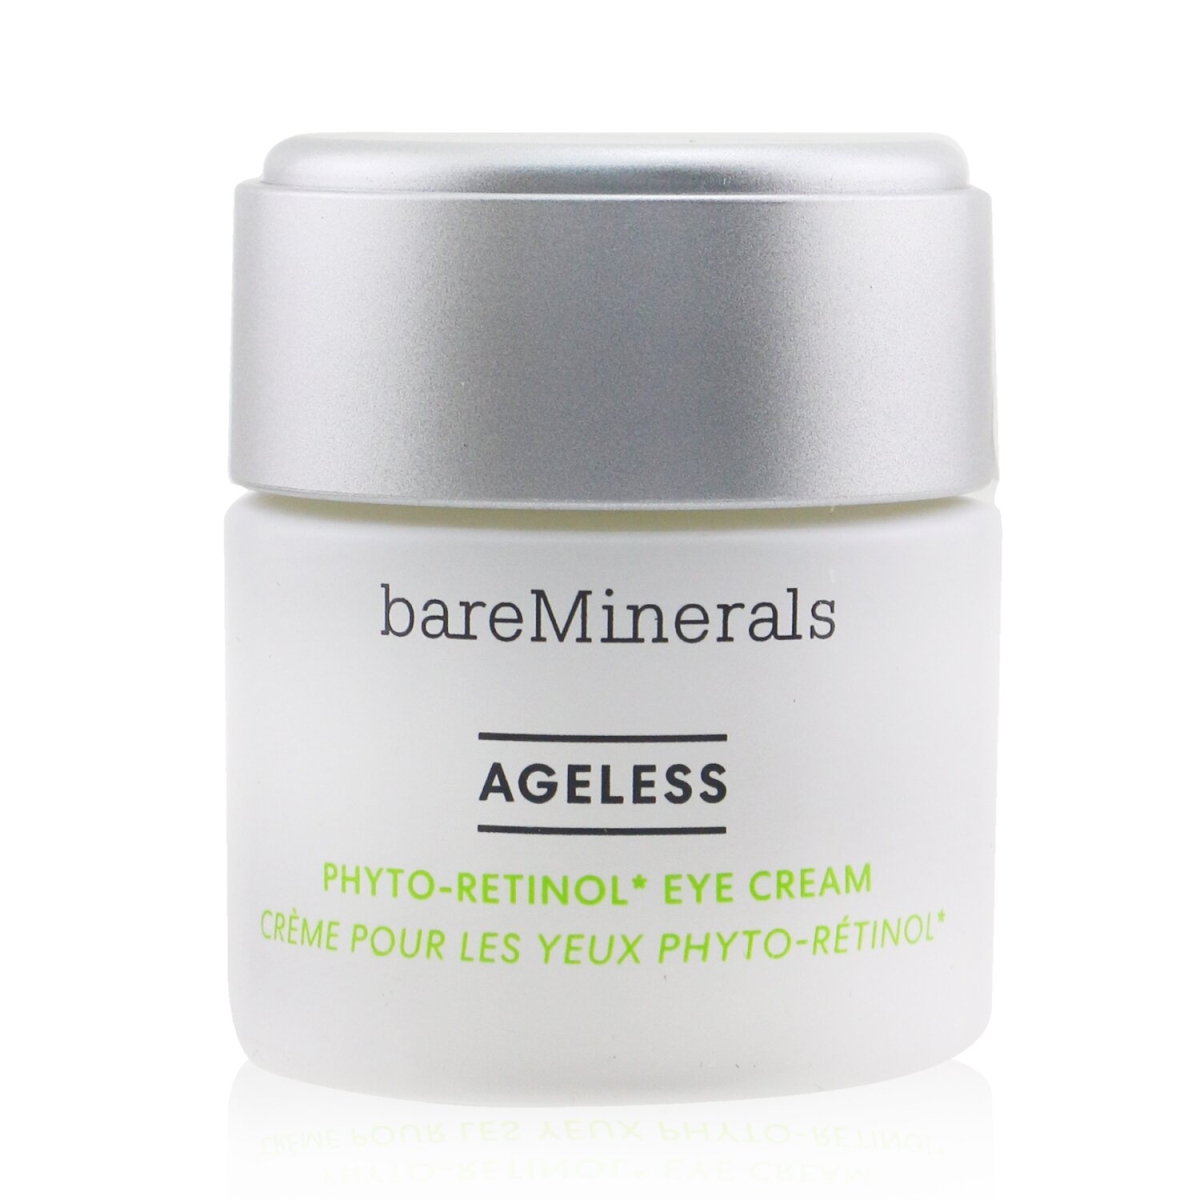 Picture of BareMinerals 263149 0.5 oz Ageless Phyto-Retinol Eye Cream